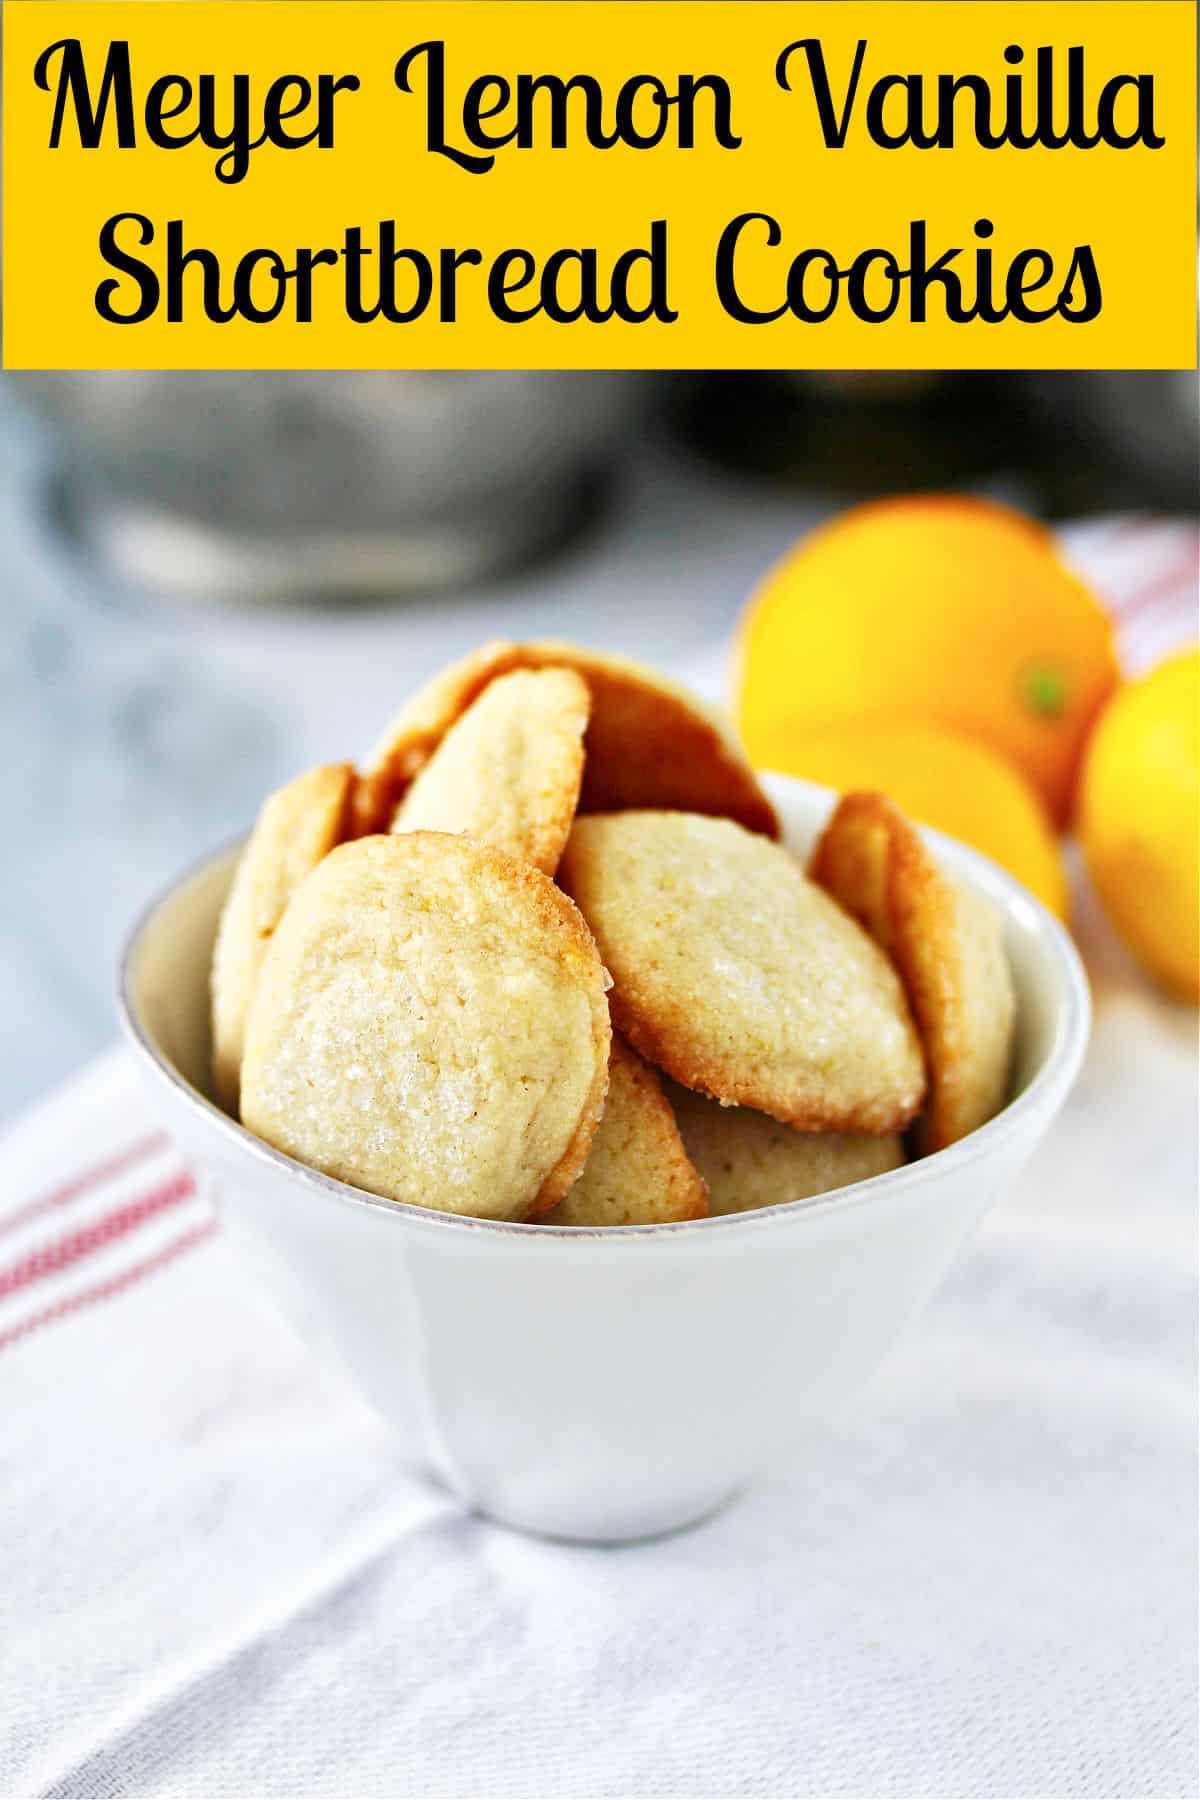 Meyer Lemon Vanilla Shortbread Cookies in a bowl.